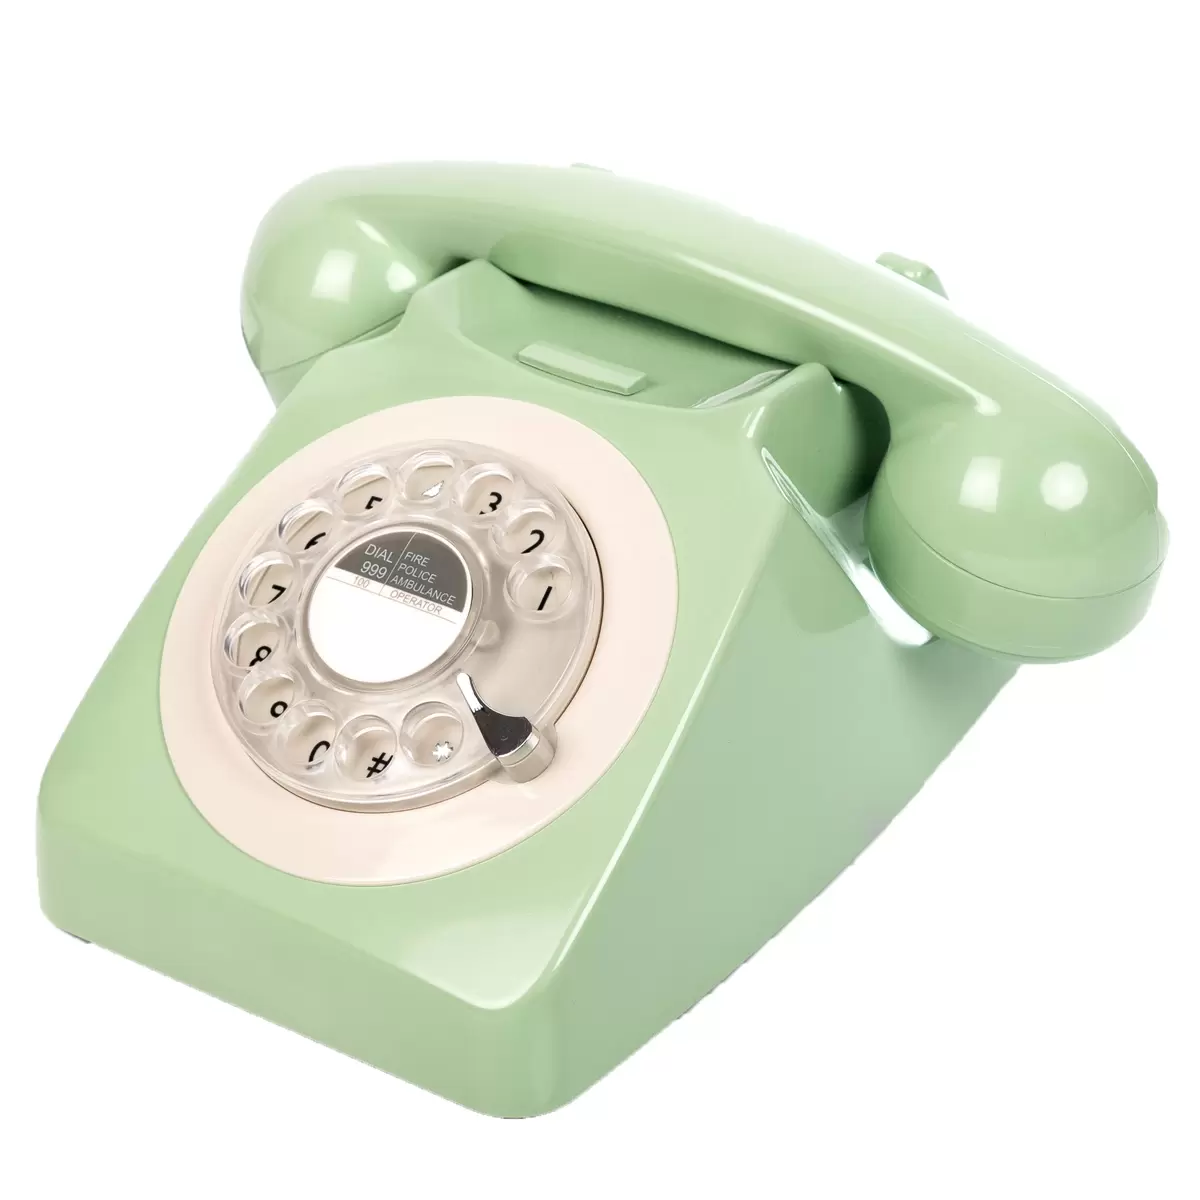 GPO 746 Rotary Telephone Green